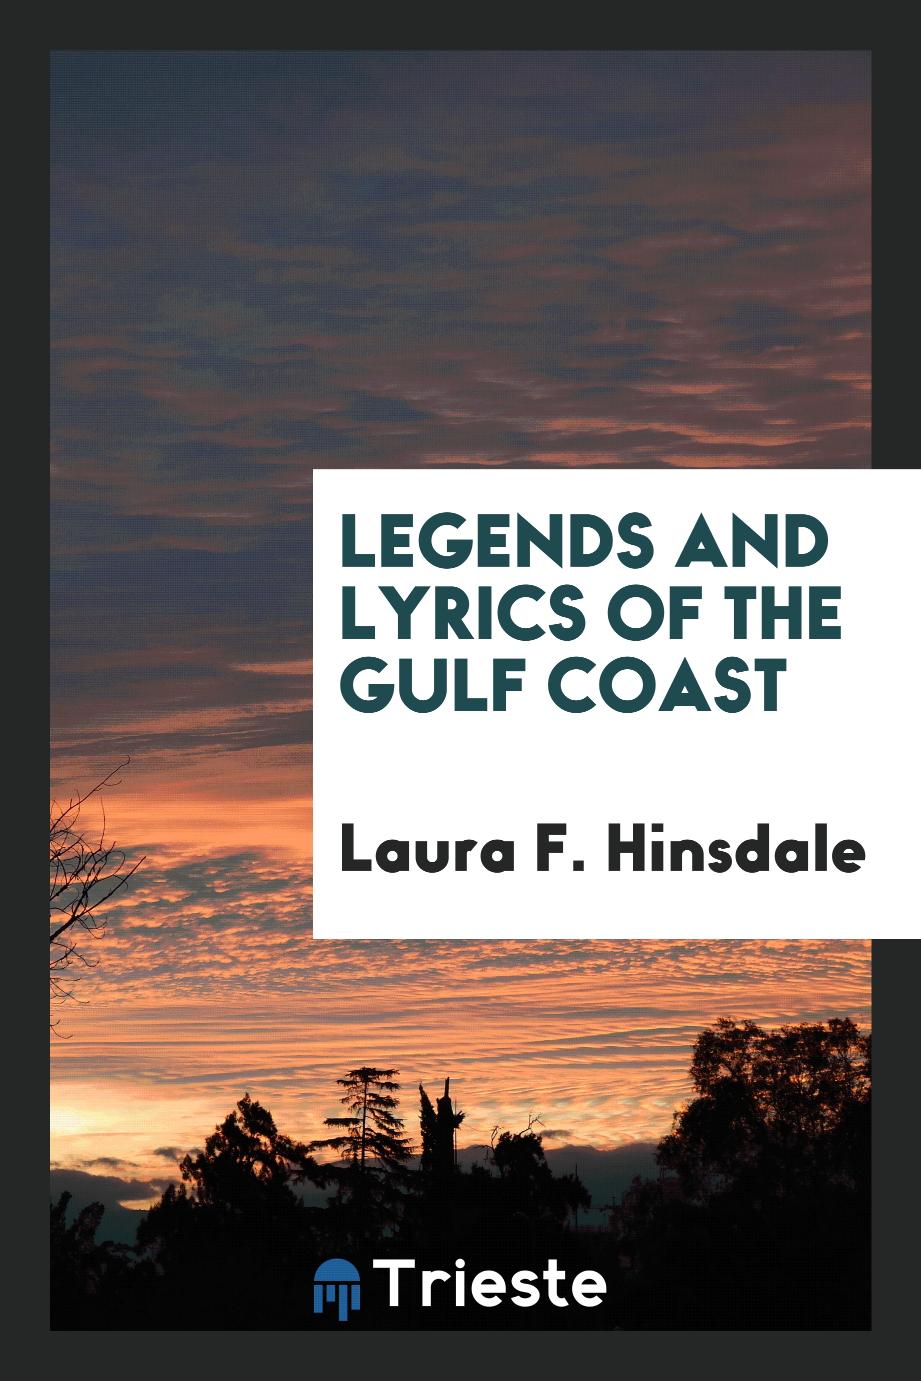 Legends and lyrics of the Gulf coast